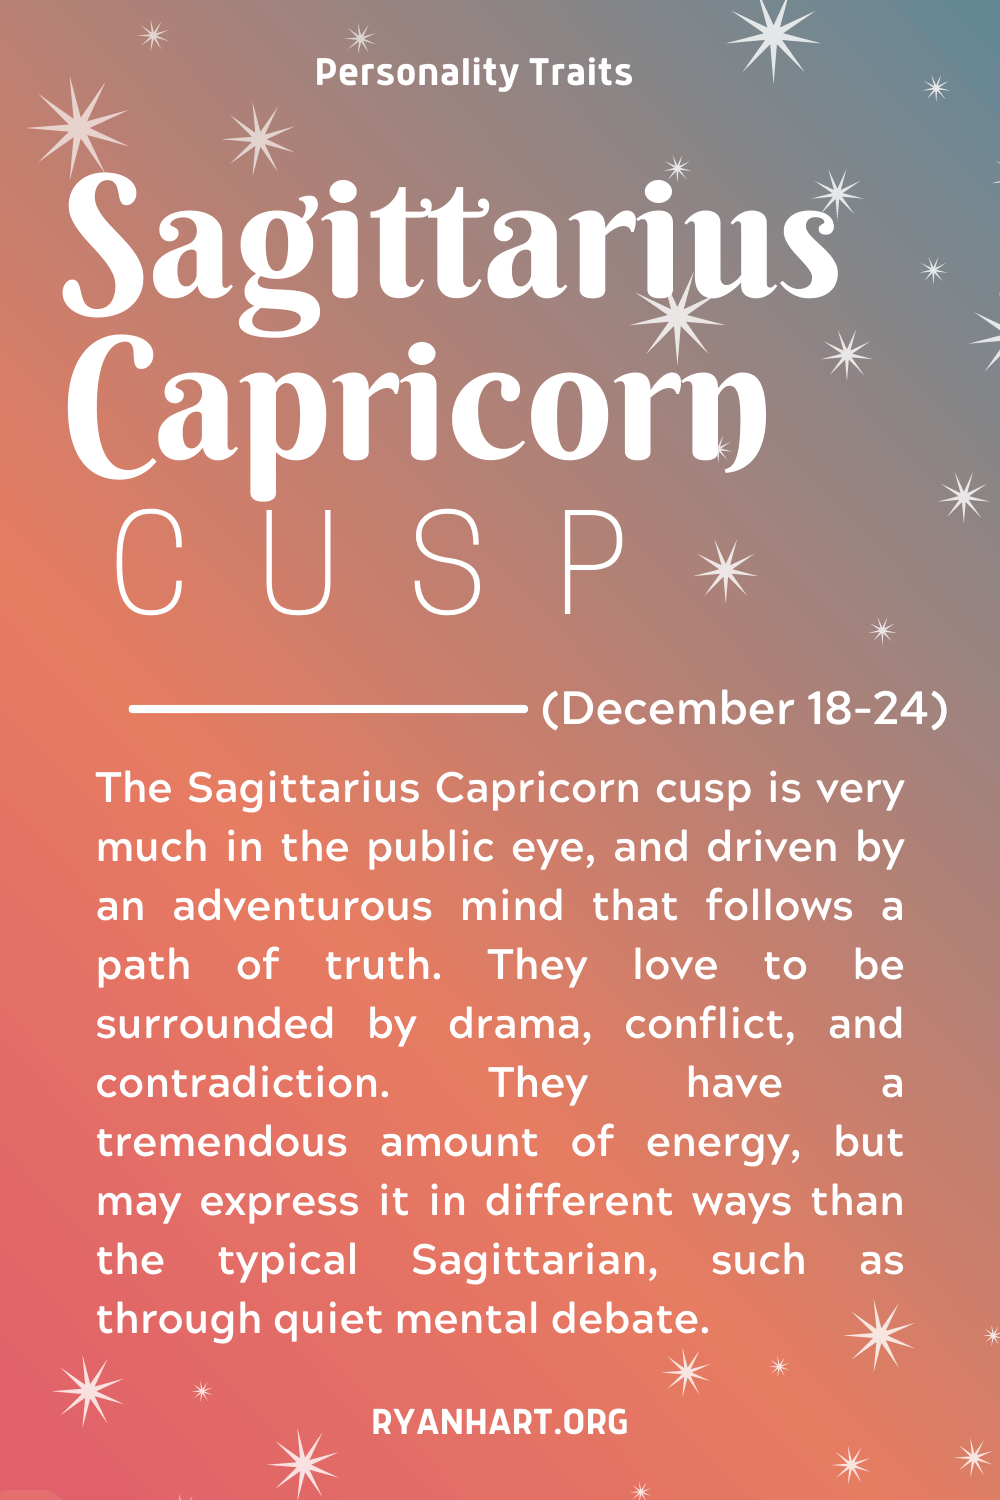 Sagittarius Capricorn Cusp Description